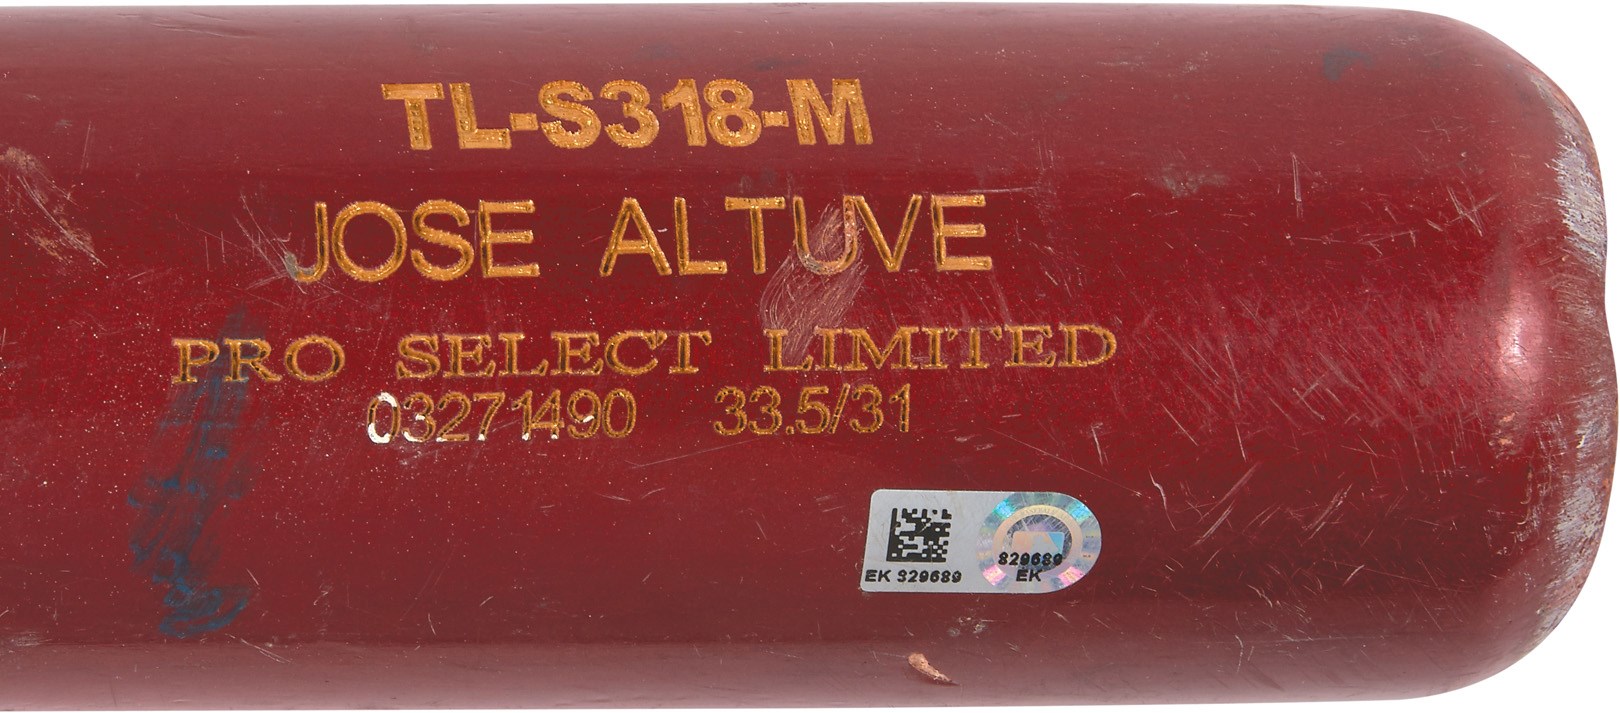 - 2014 Batting Champion Jose Altuve Game Used Astros Bat (MLB Auth. & Photo-Matched)